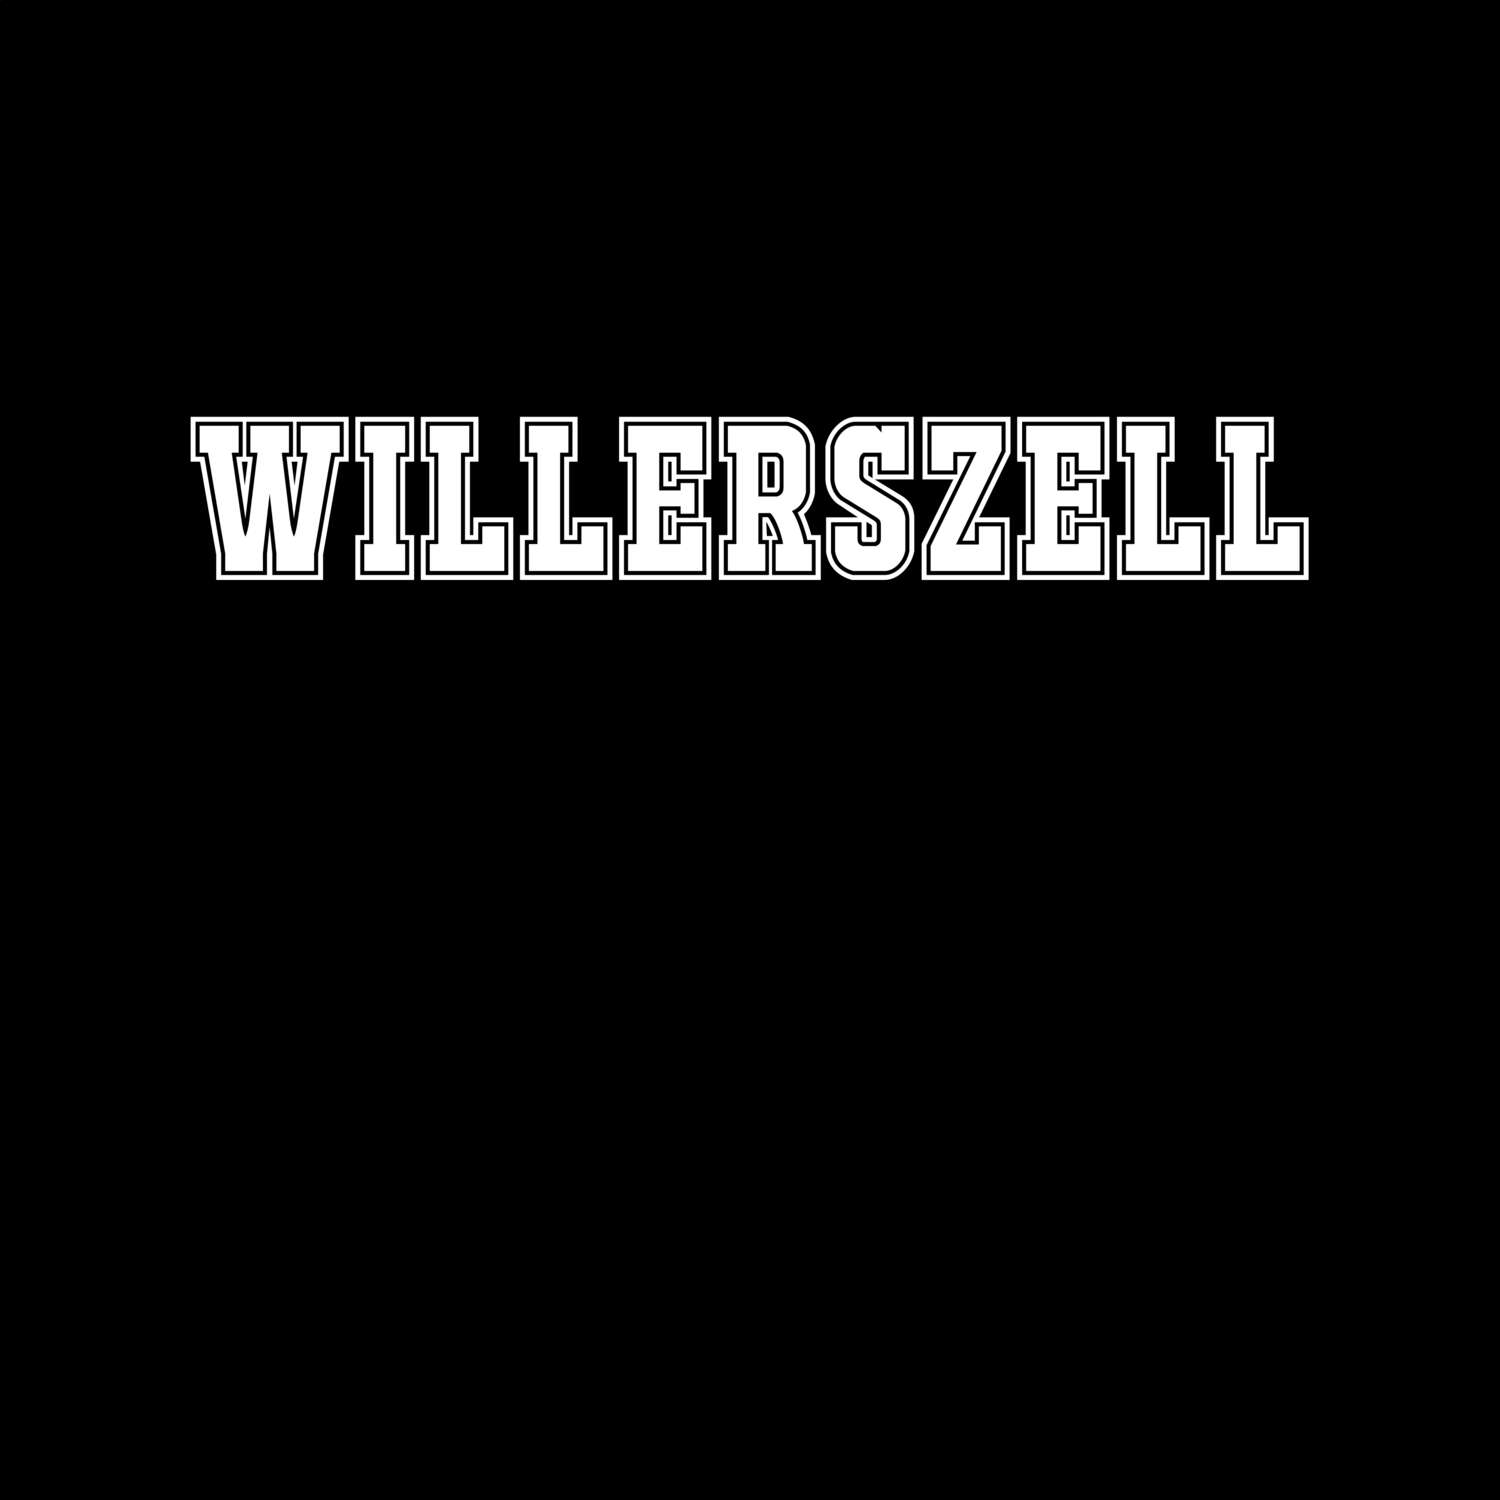 Willerszell T-Shirt »Classic«